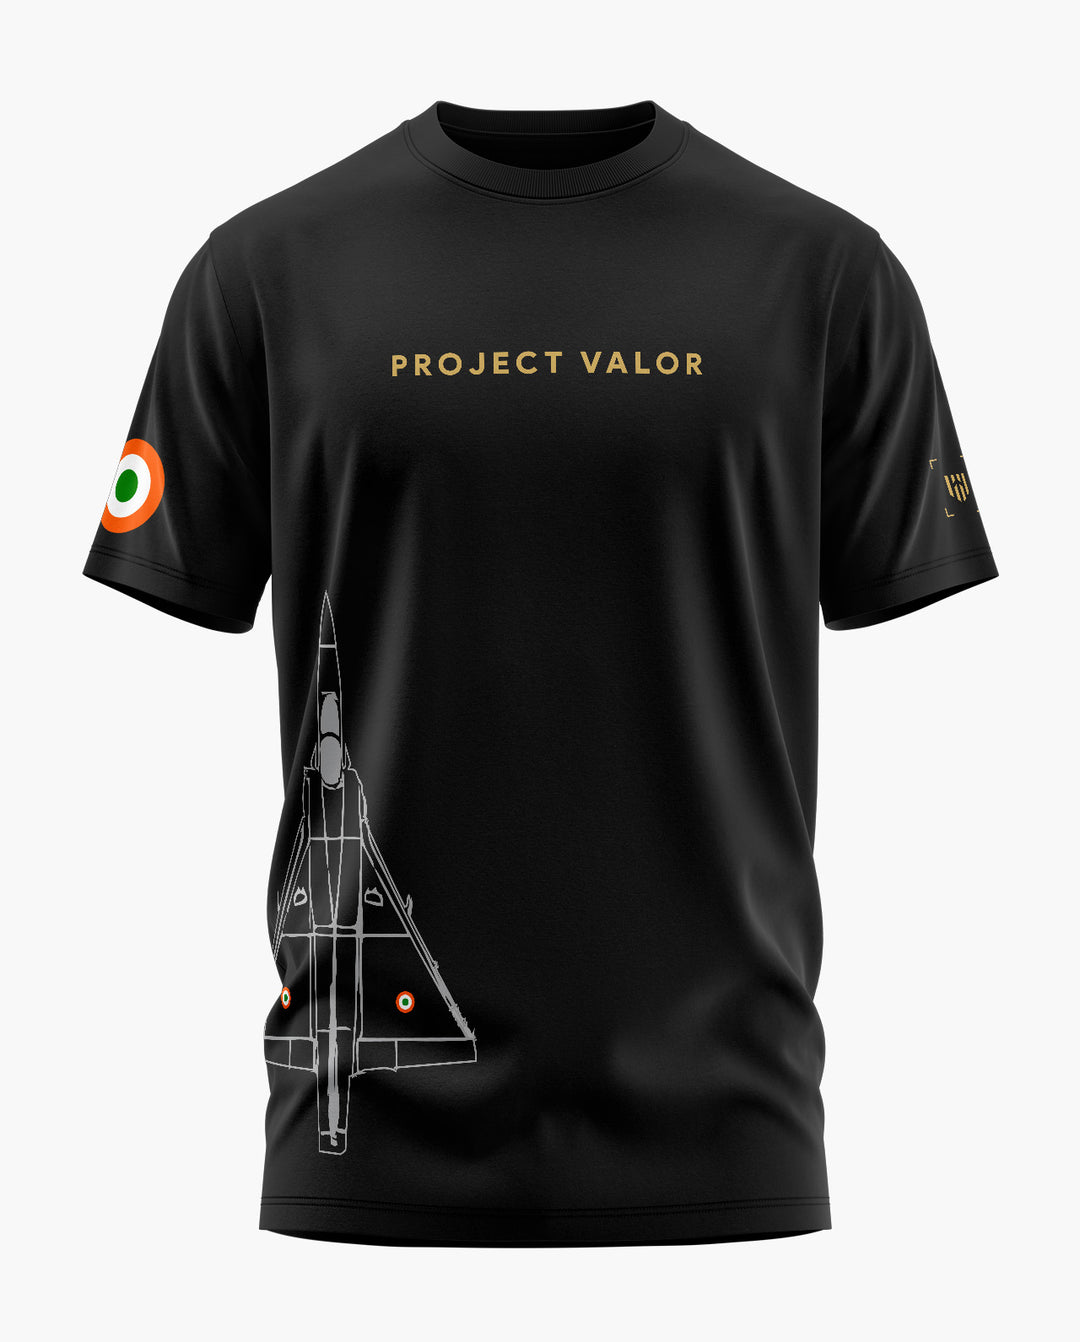 PROJECT VALOR AIRCRAFT T-Shirt